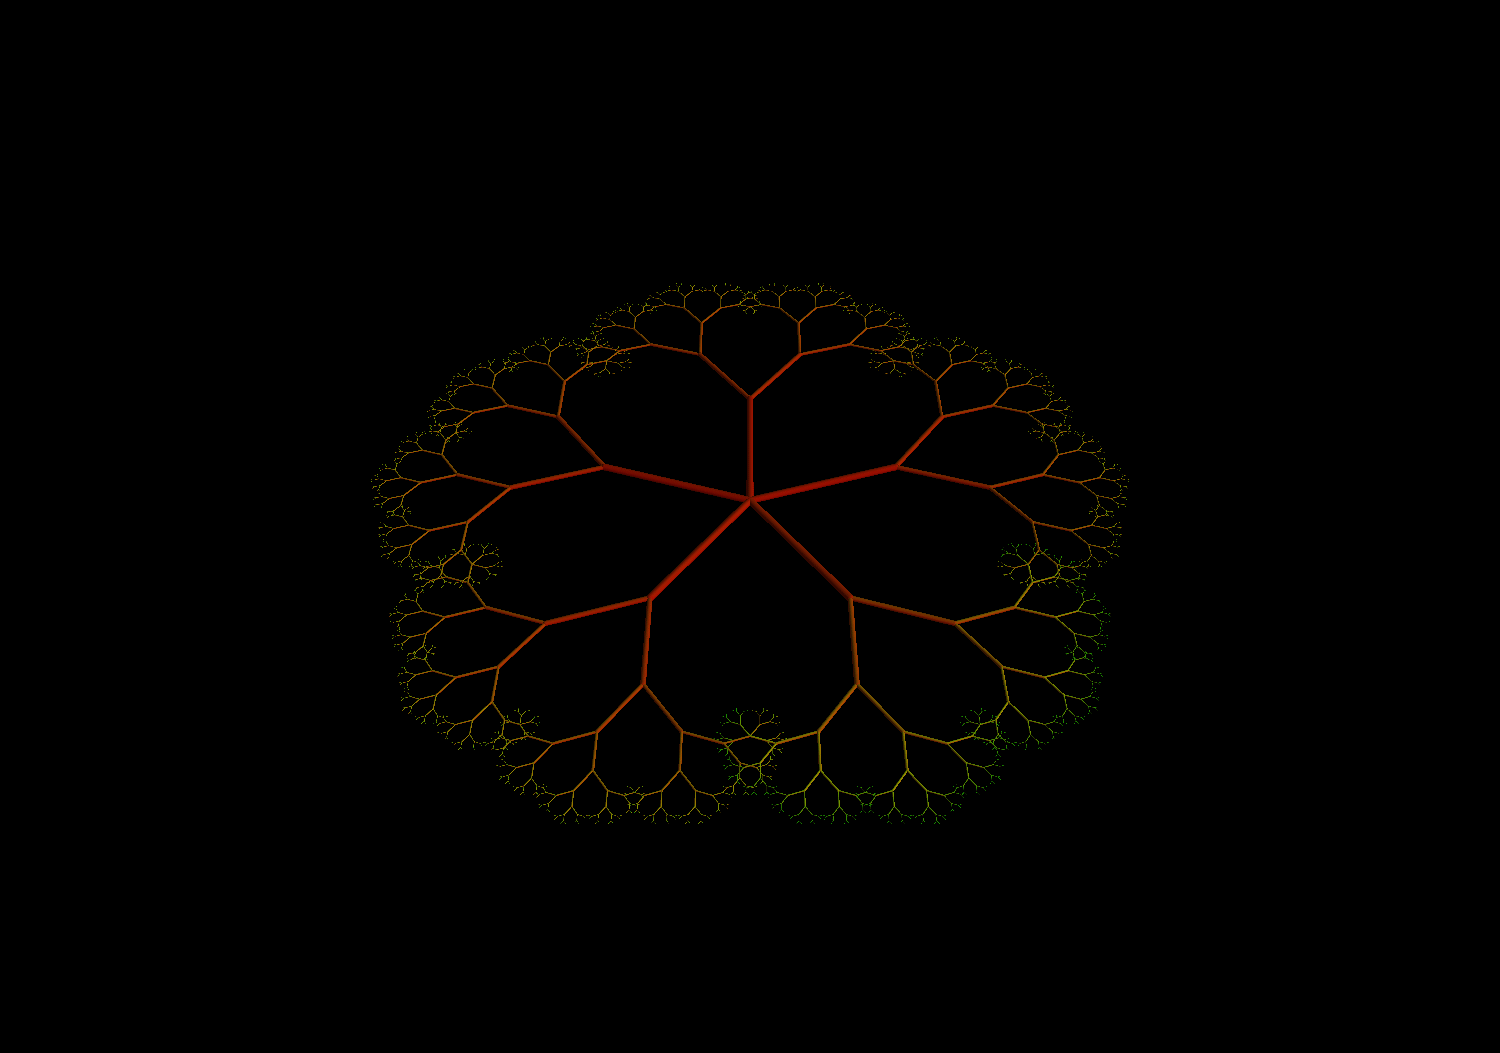 Harmonic Fractal Tree 5-Fold Symmetry Golden Ratio